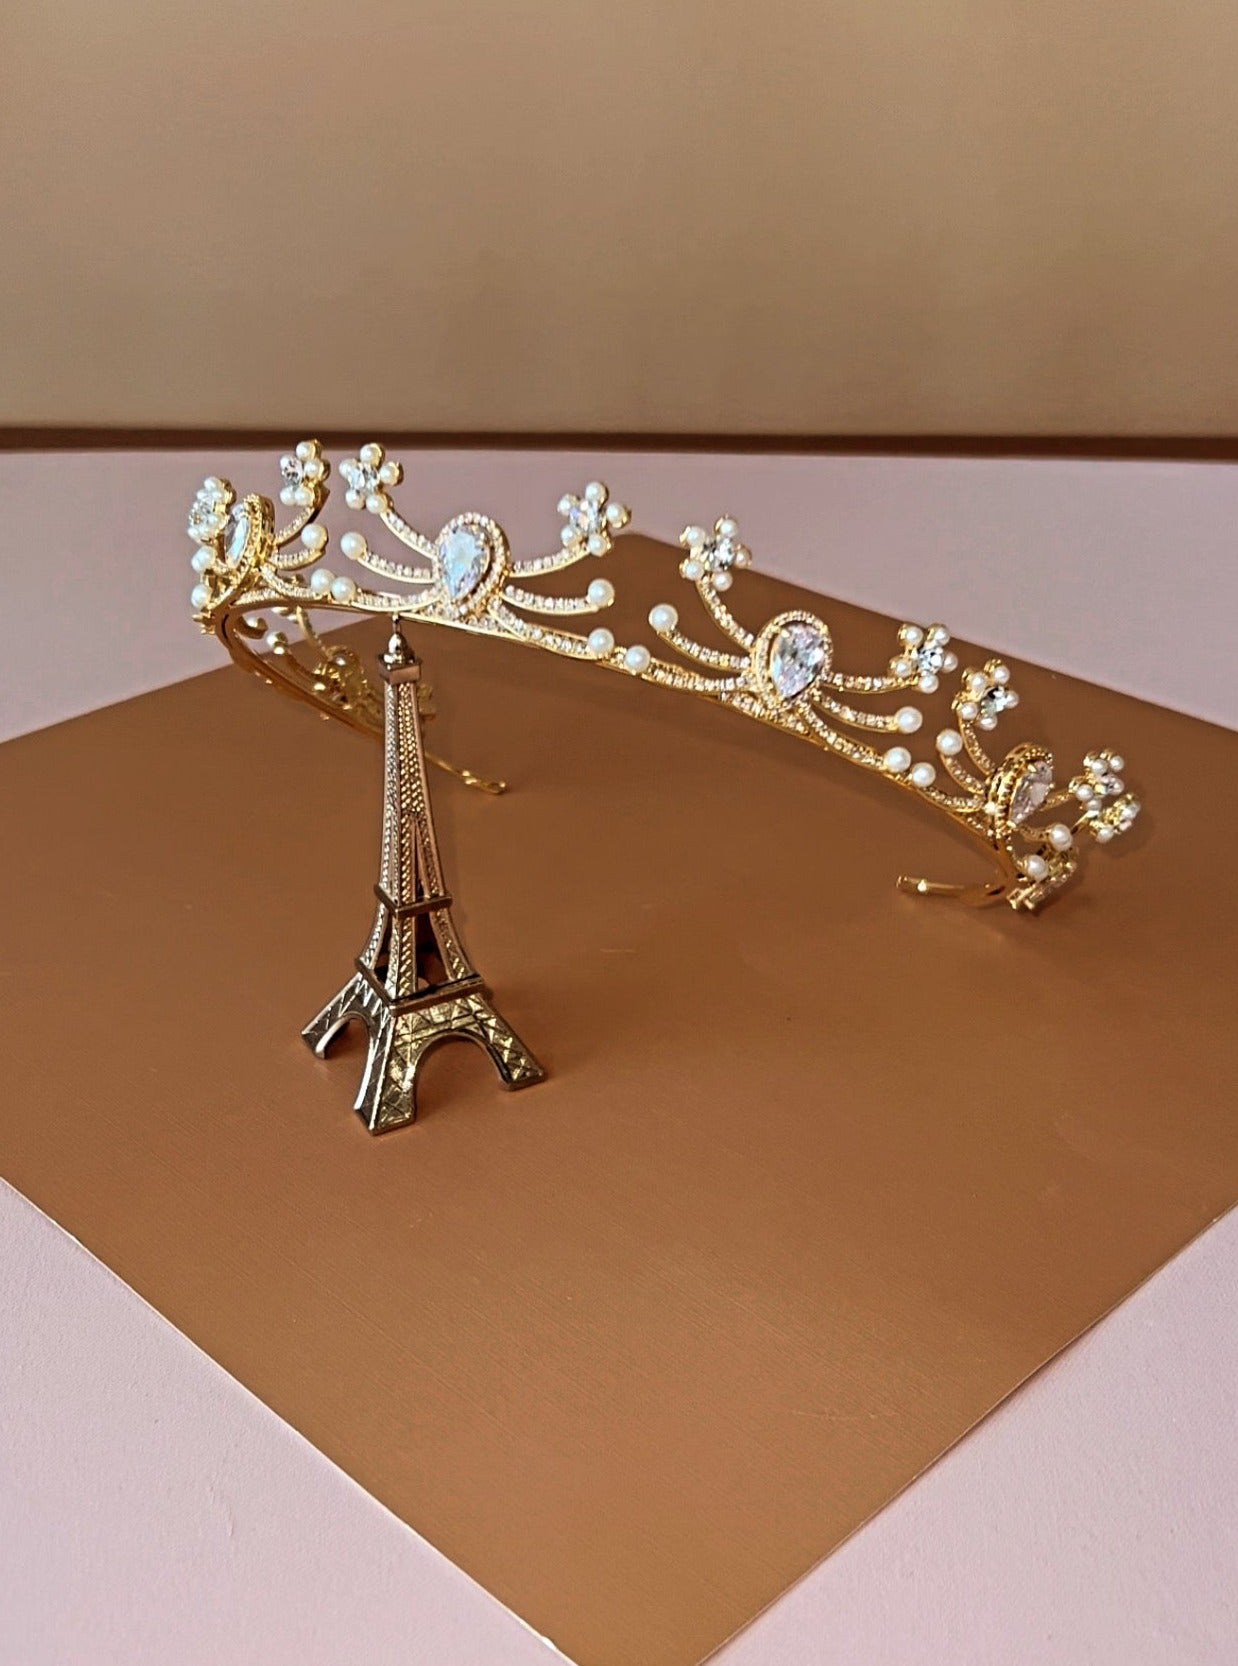 PARIS-PEARLS Swarovski Gorgeous Bridal Tiara - SAMPLE SALE